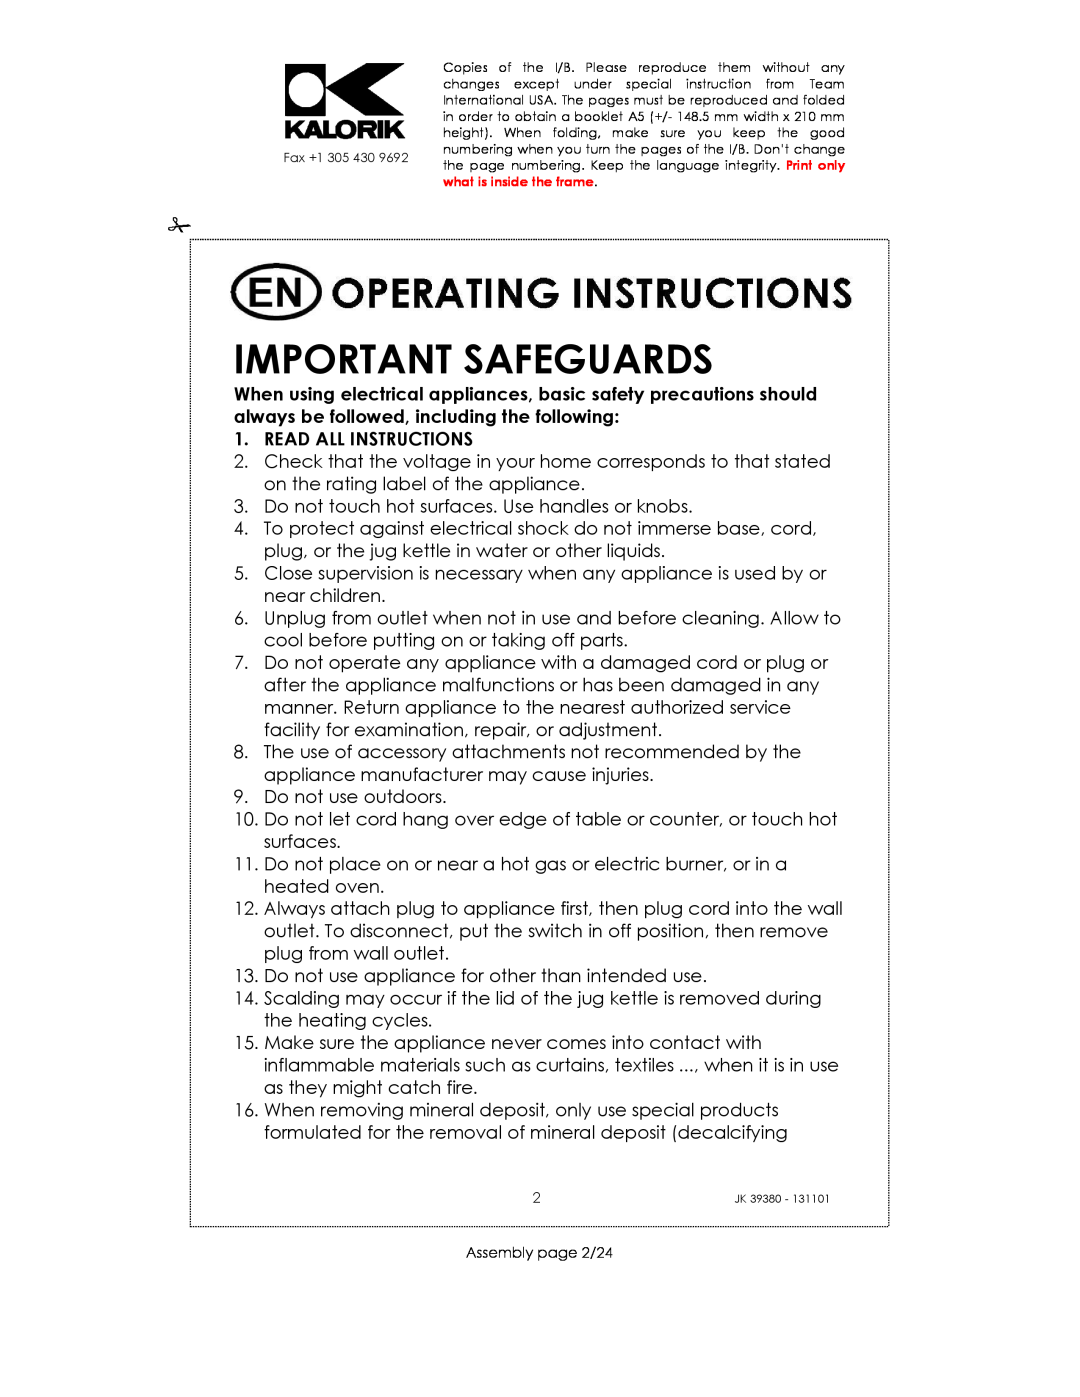 Kalorik JK 39380 manual Important Safeguards, Read All Instructions 